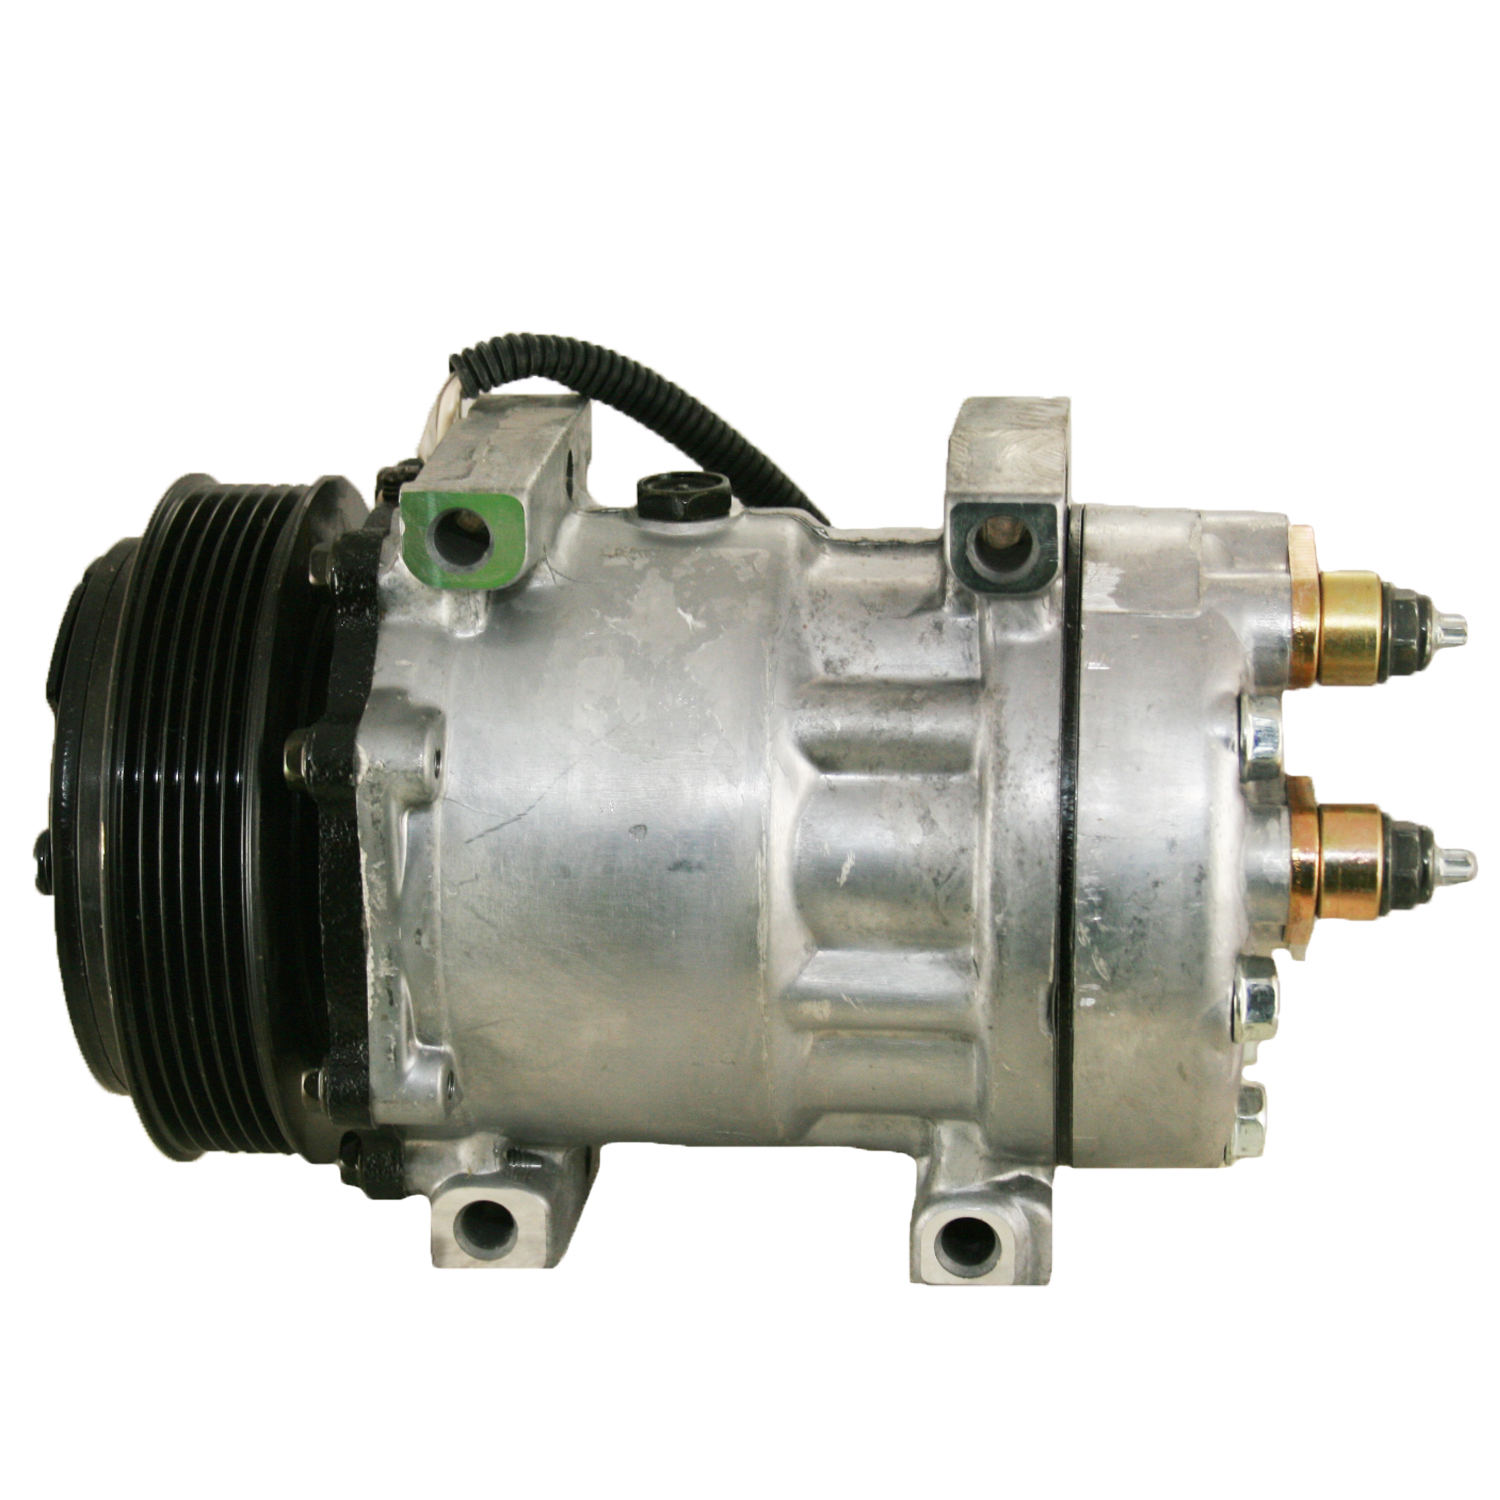 TCW Compressor 40598.601NEW New Product Image field_60b6a13a6e67c